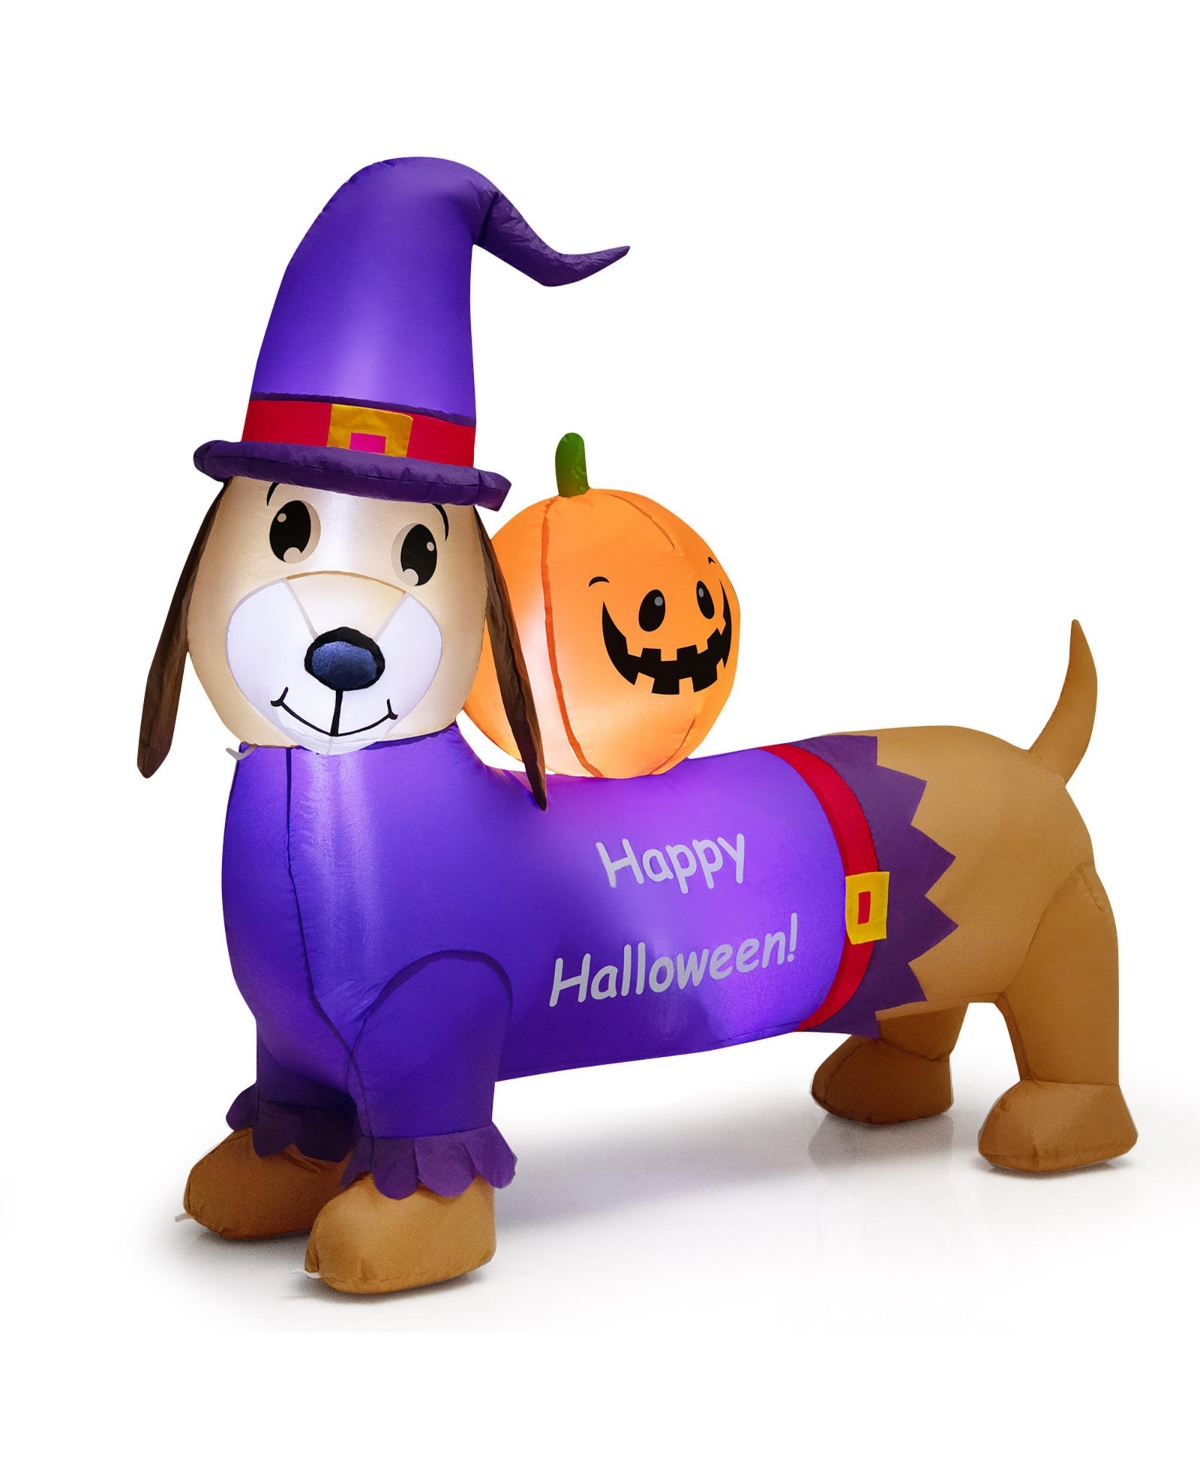 5 Ft Long Halloween Inflatable Dachshund Dog with Pumpkin Self Inflating Yard - Purple